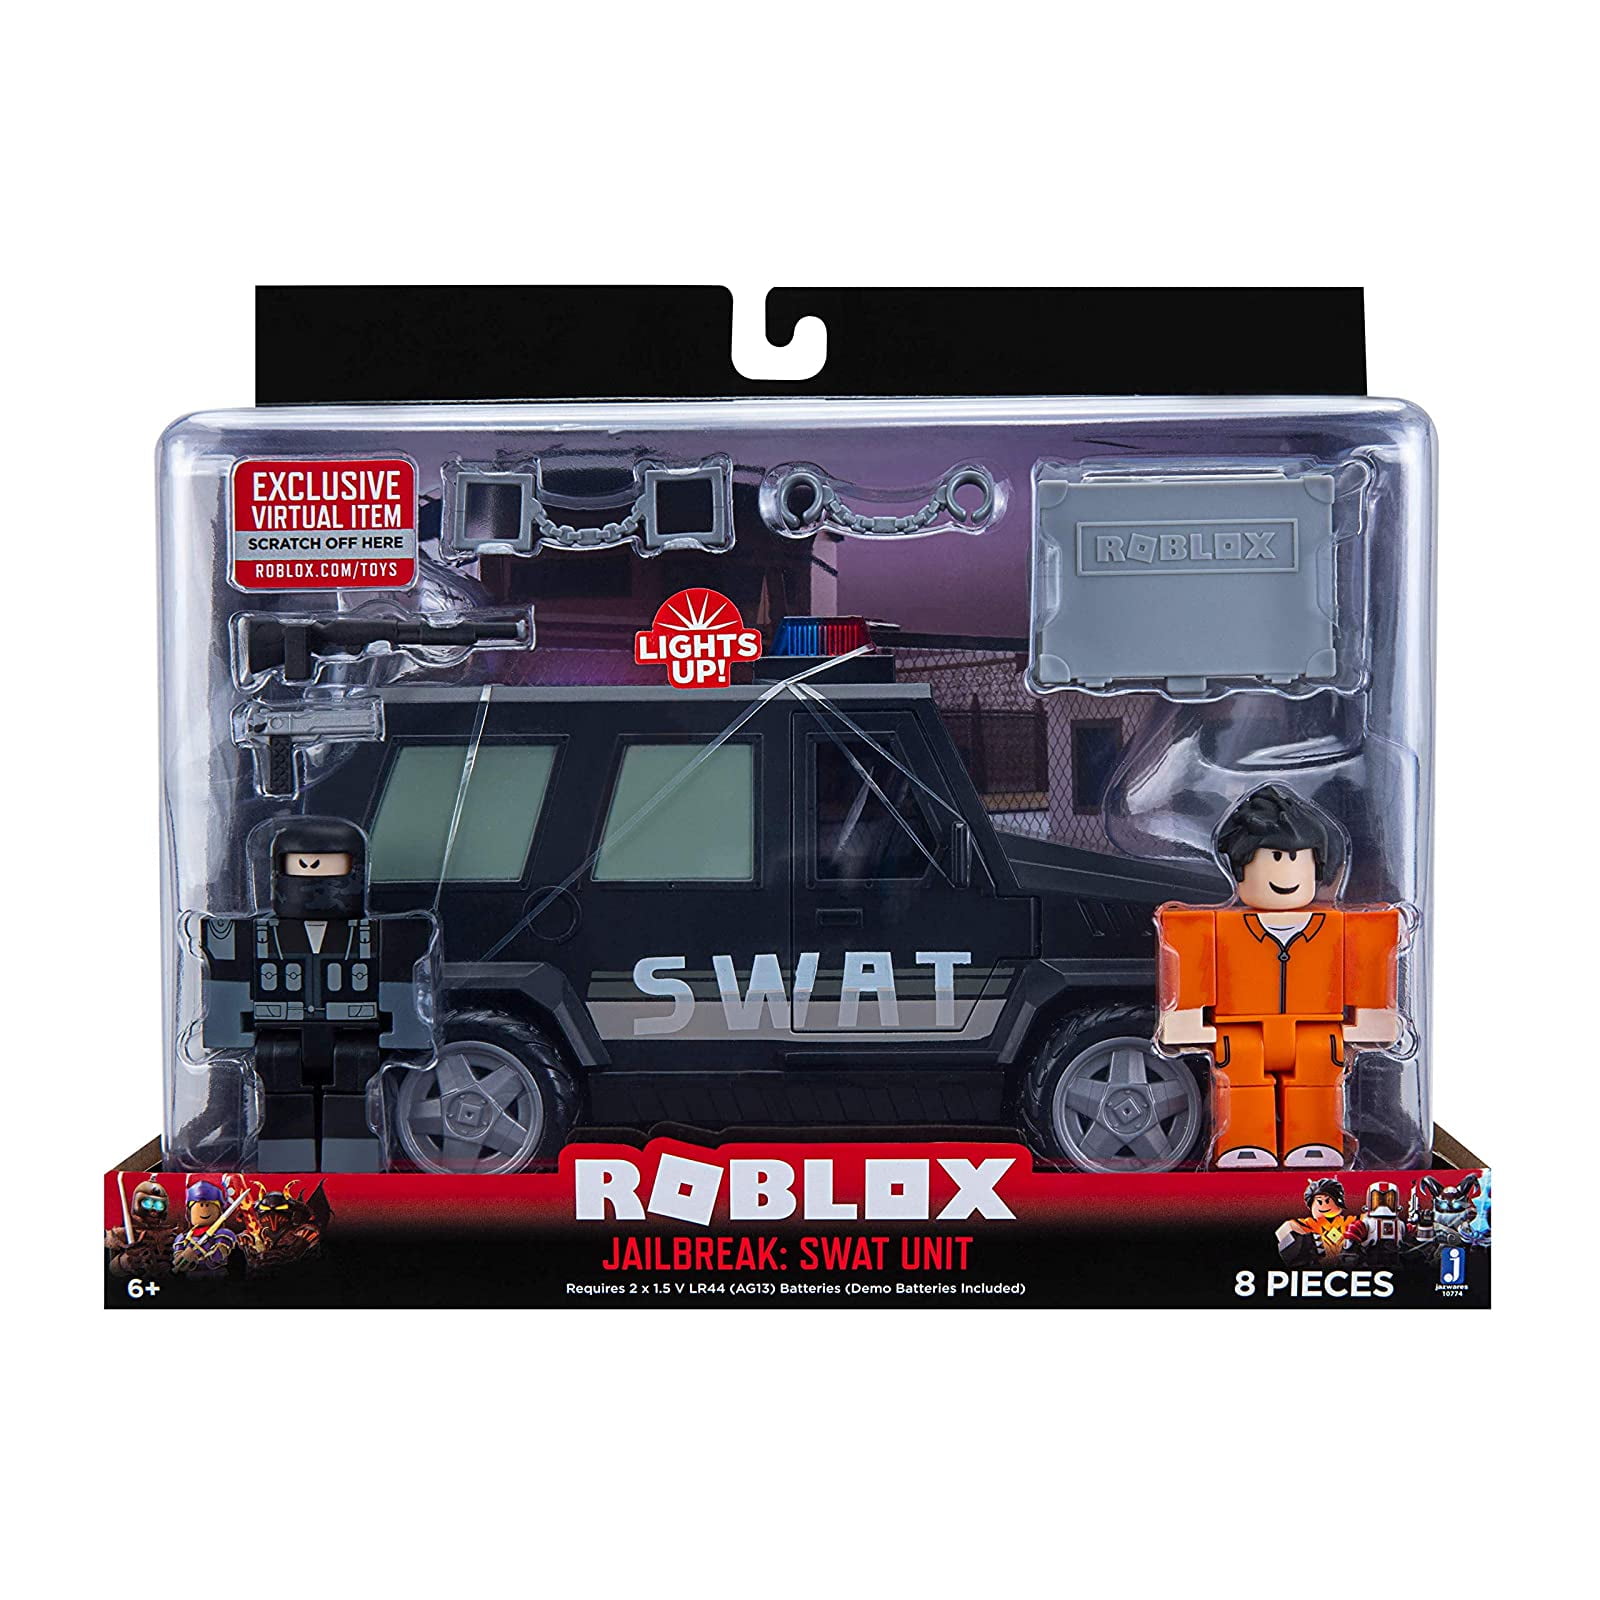 Roblox Action Collection Jailbreak Swat Unit Vehicle Includes Exclusive Virtual Item Original Version 10774 Walmart Com Walmart Com - roblox auto club sport